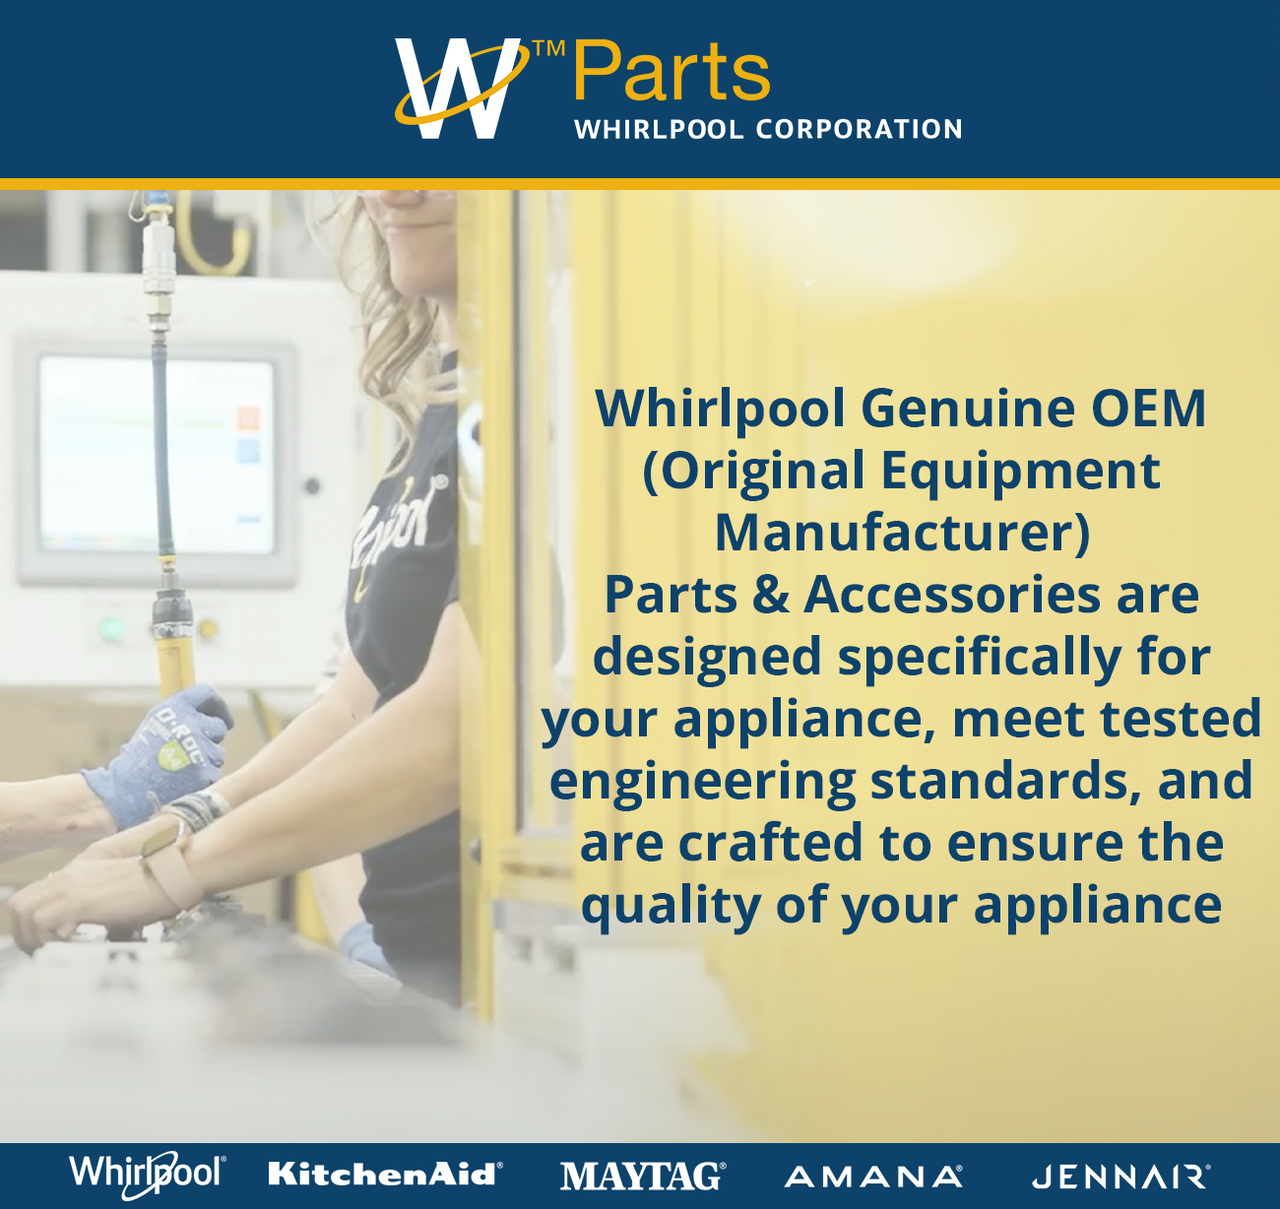 Whirlpool WP8540402 - Front Load Washer Detergent Dispenser Drawer - Whirlpool Genuine Part Badge